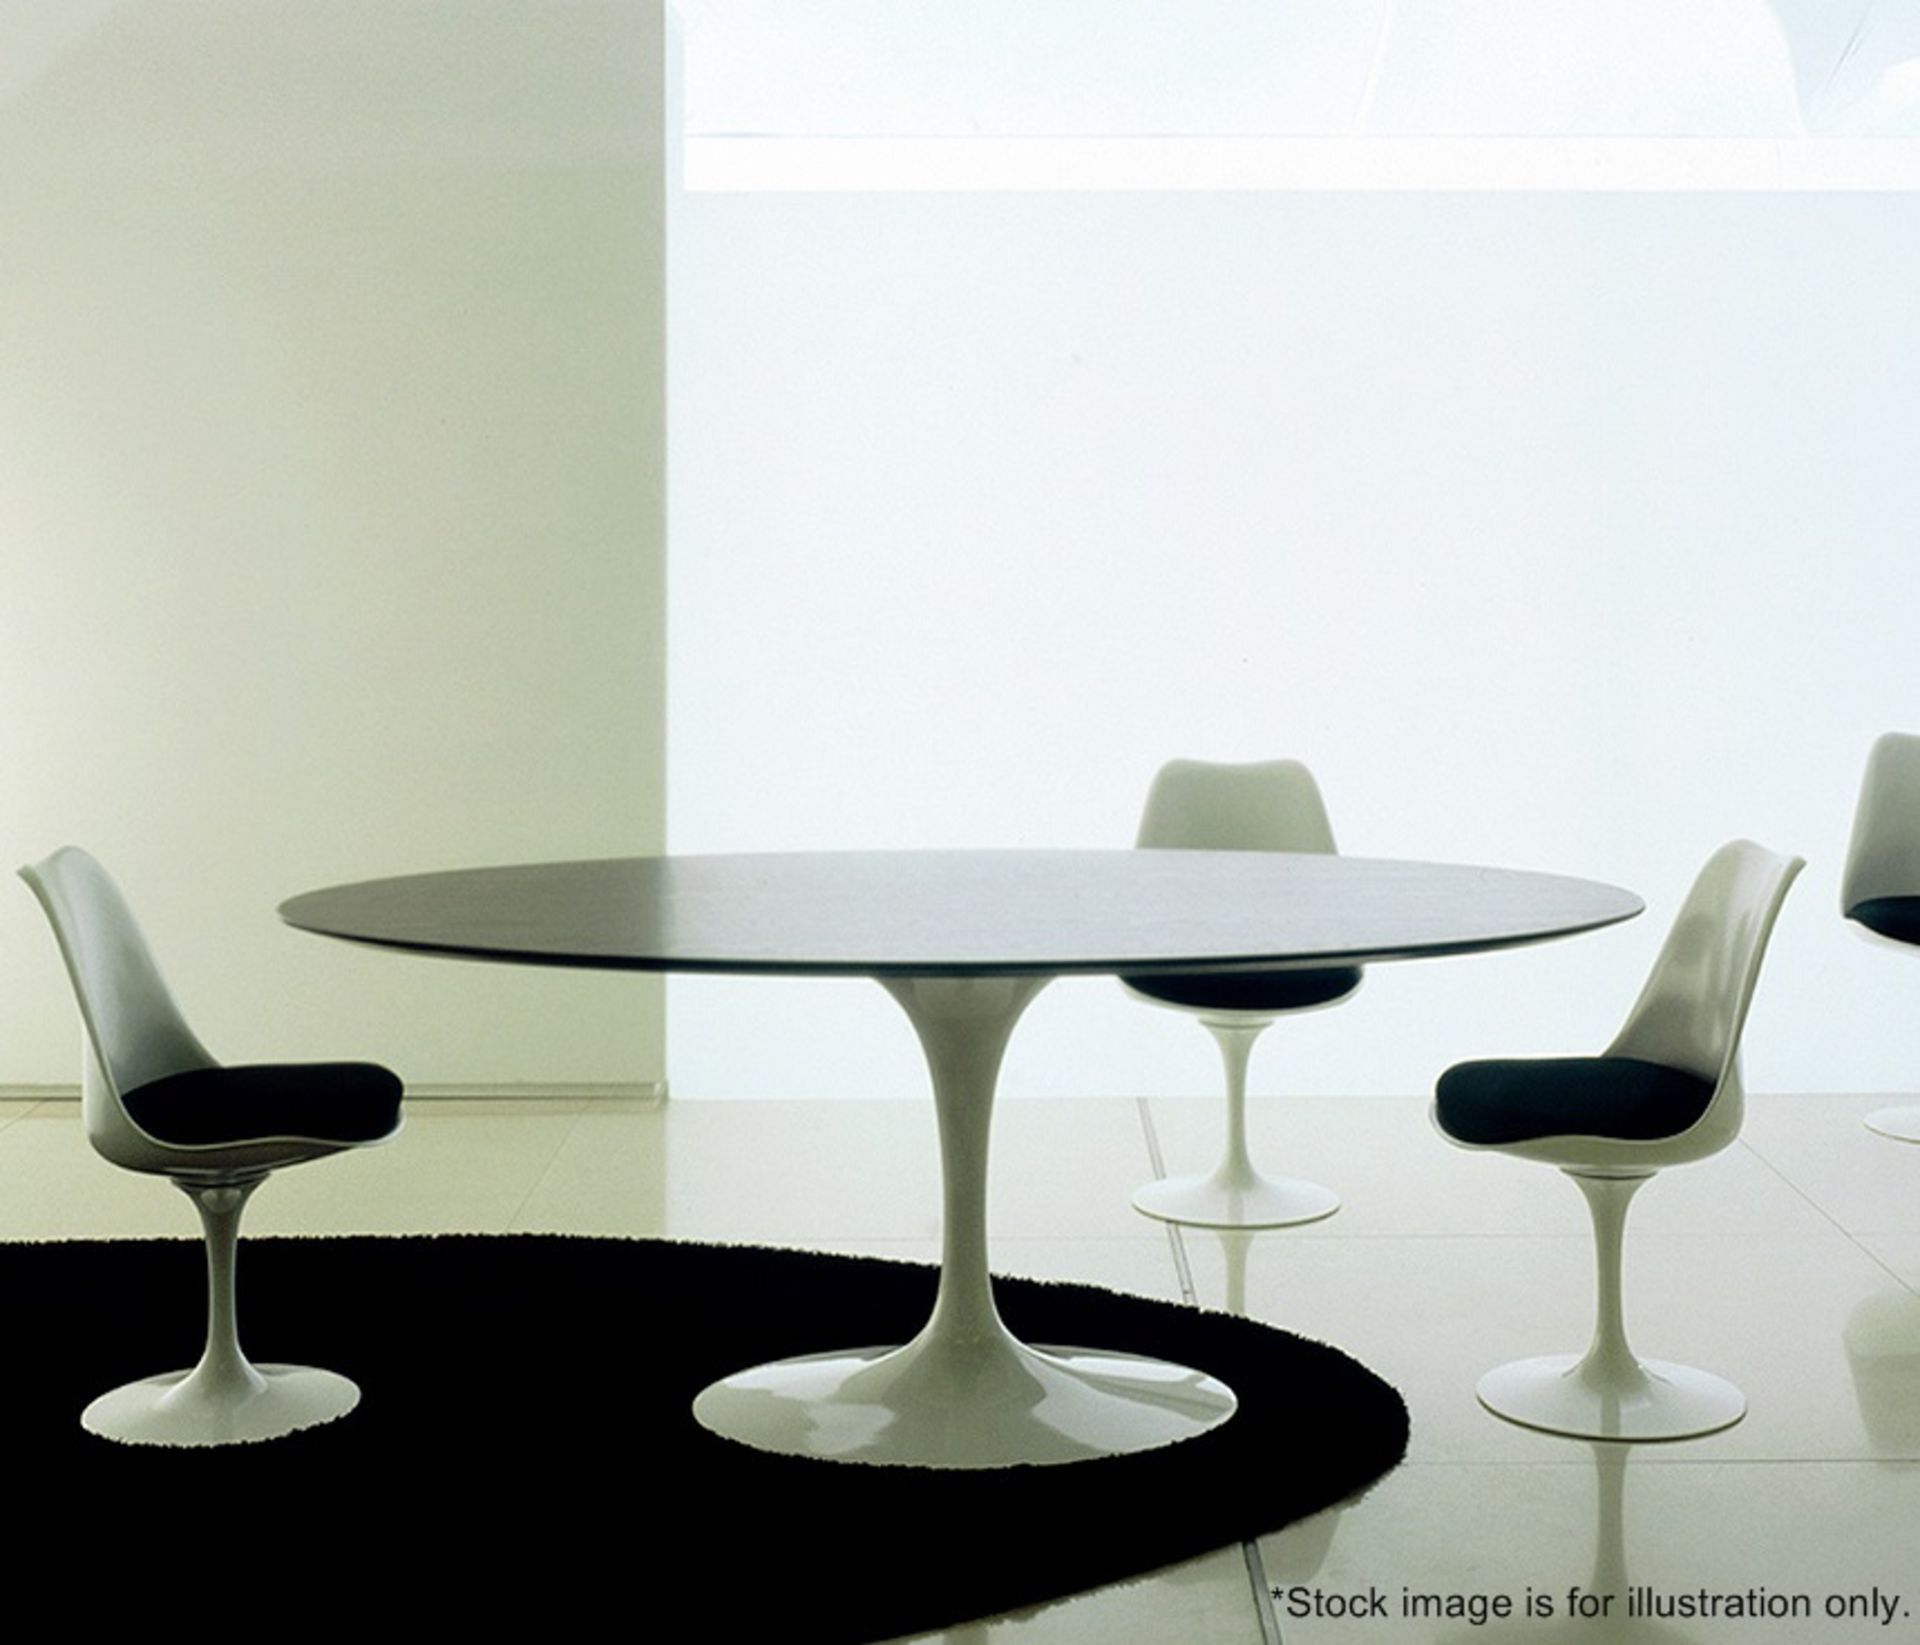 1 x Eero Saarinen Inspired 198cm Grey Granite Tulip Dining Table - New and Boxed - RRP £4,000!